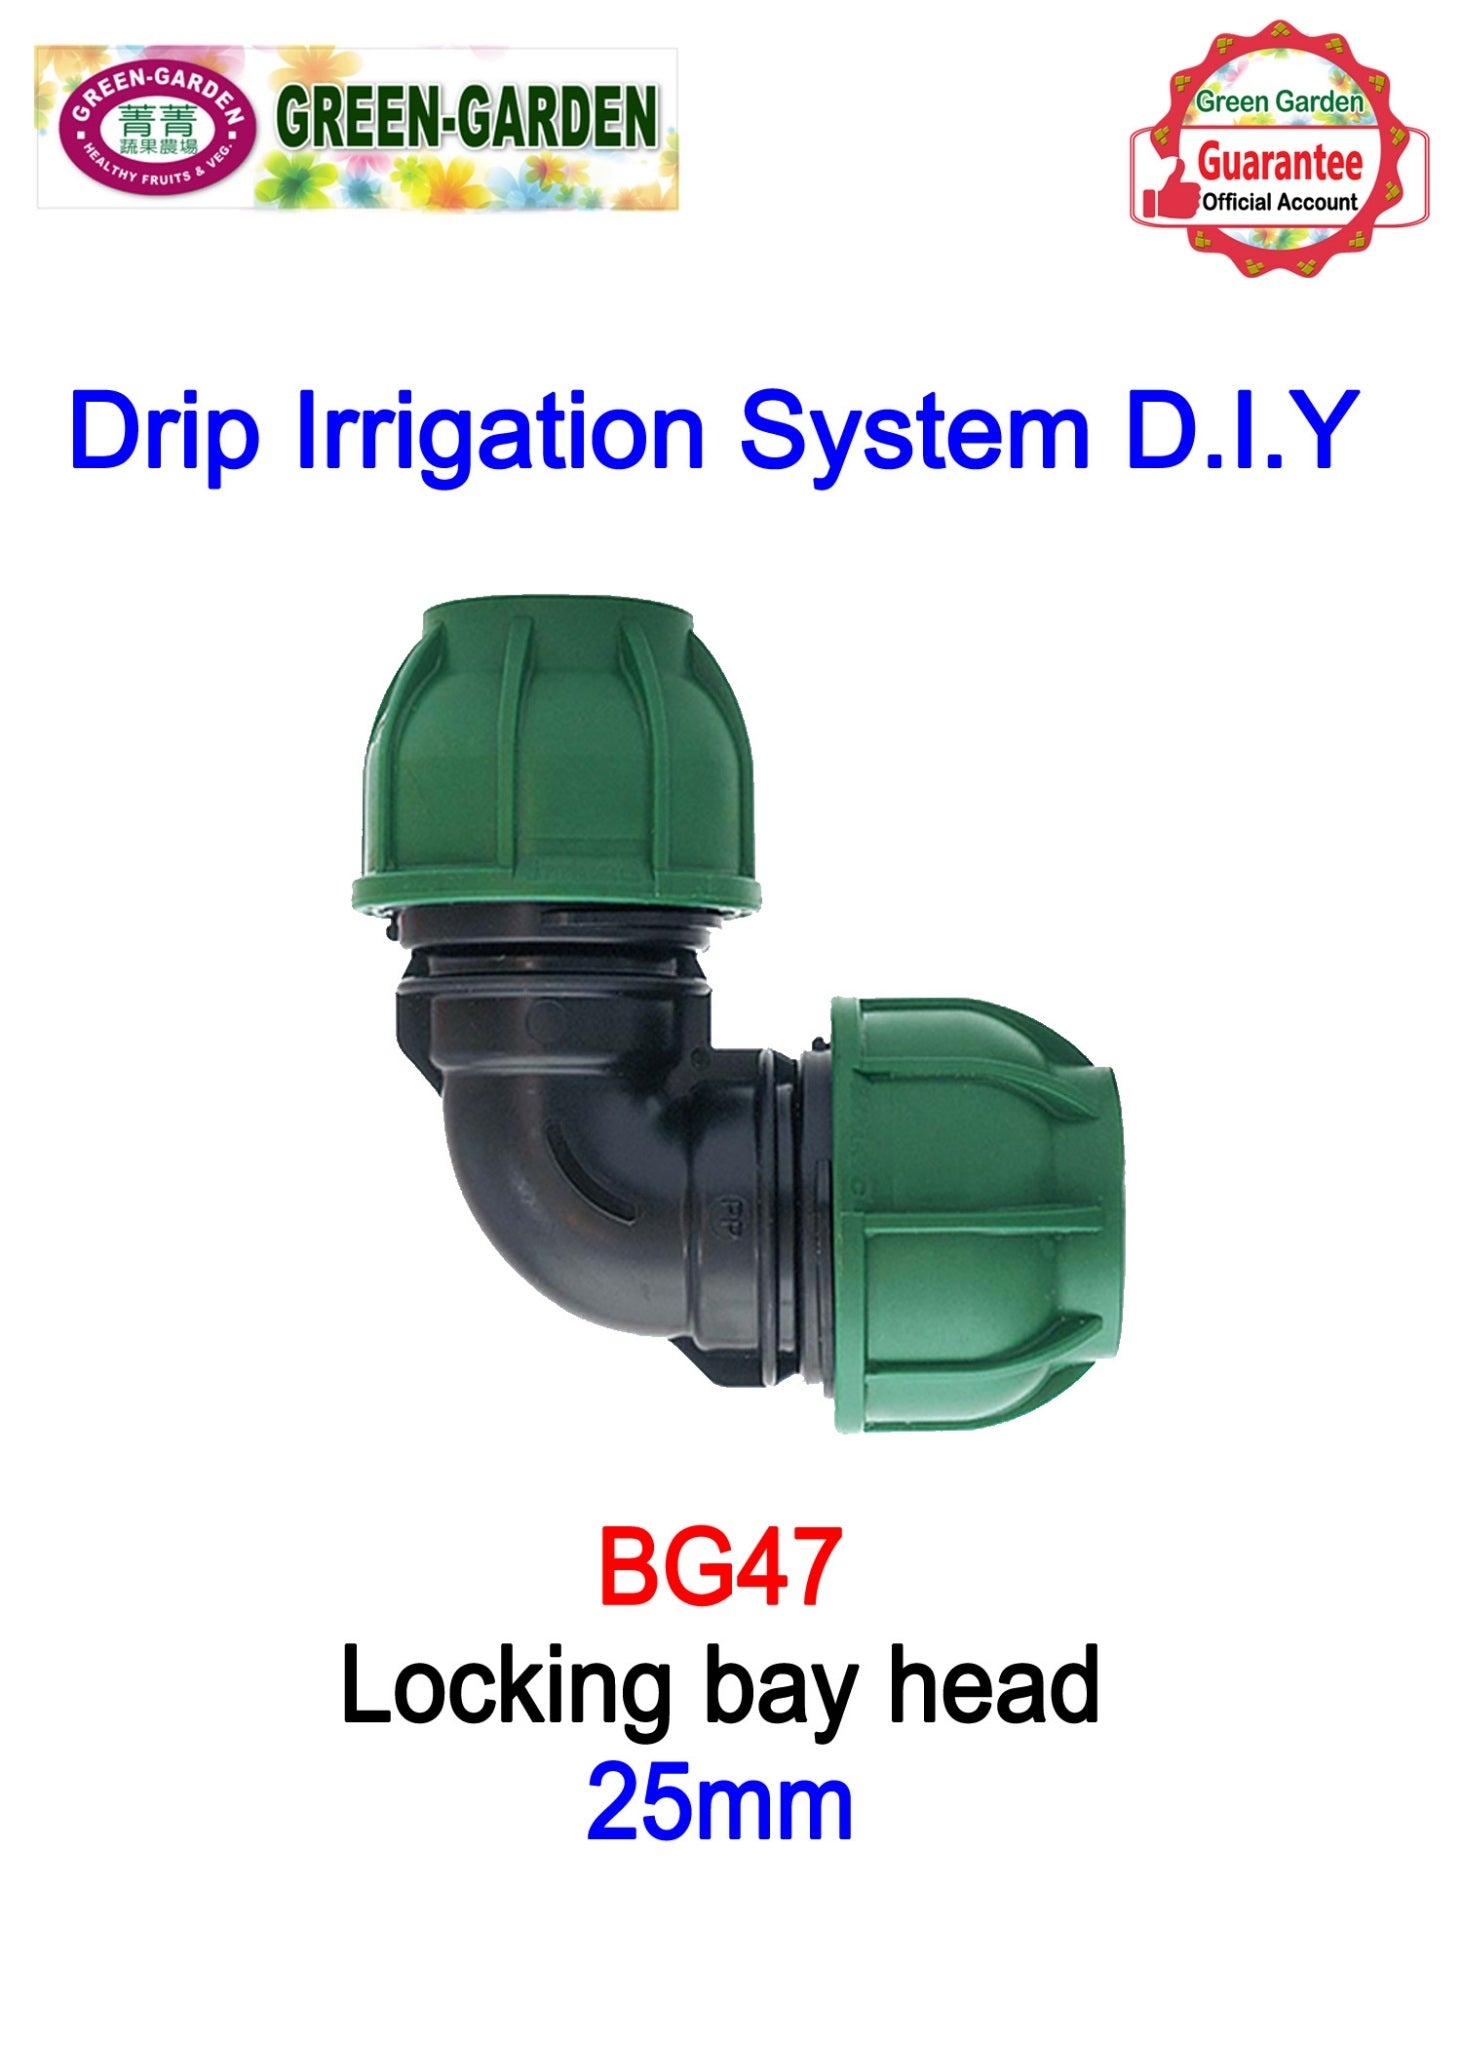 Drip Irrigation System - 25mm locking bay head BG47